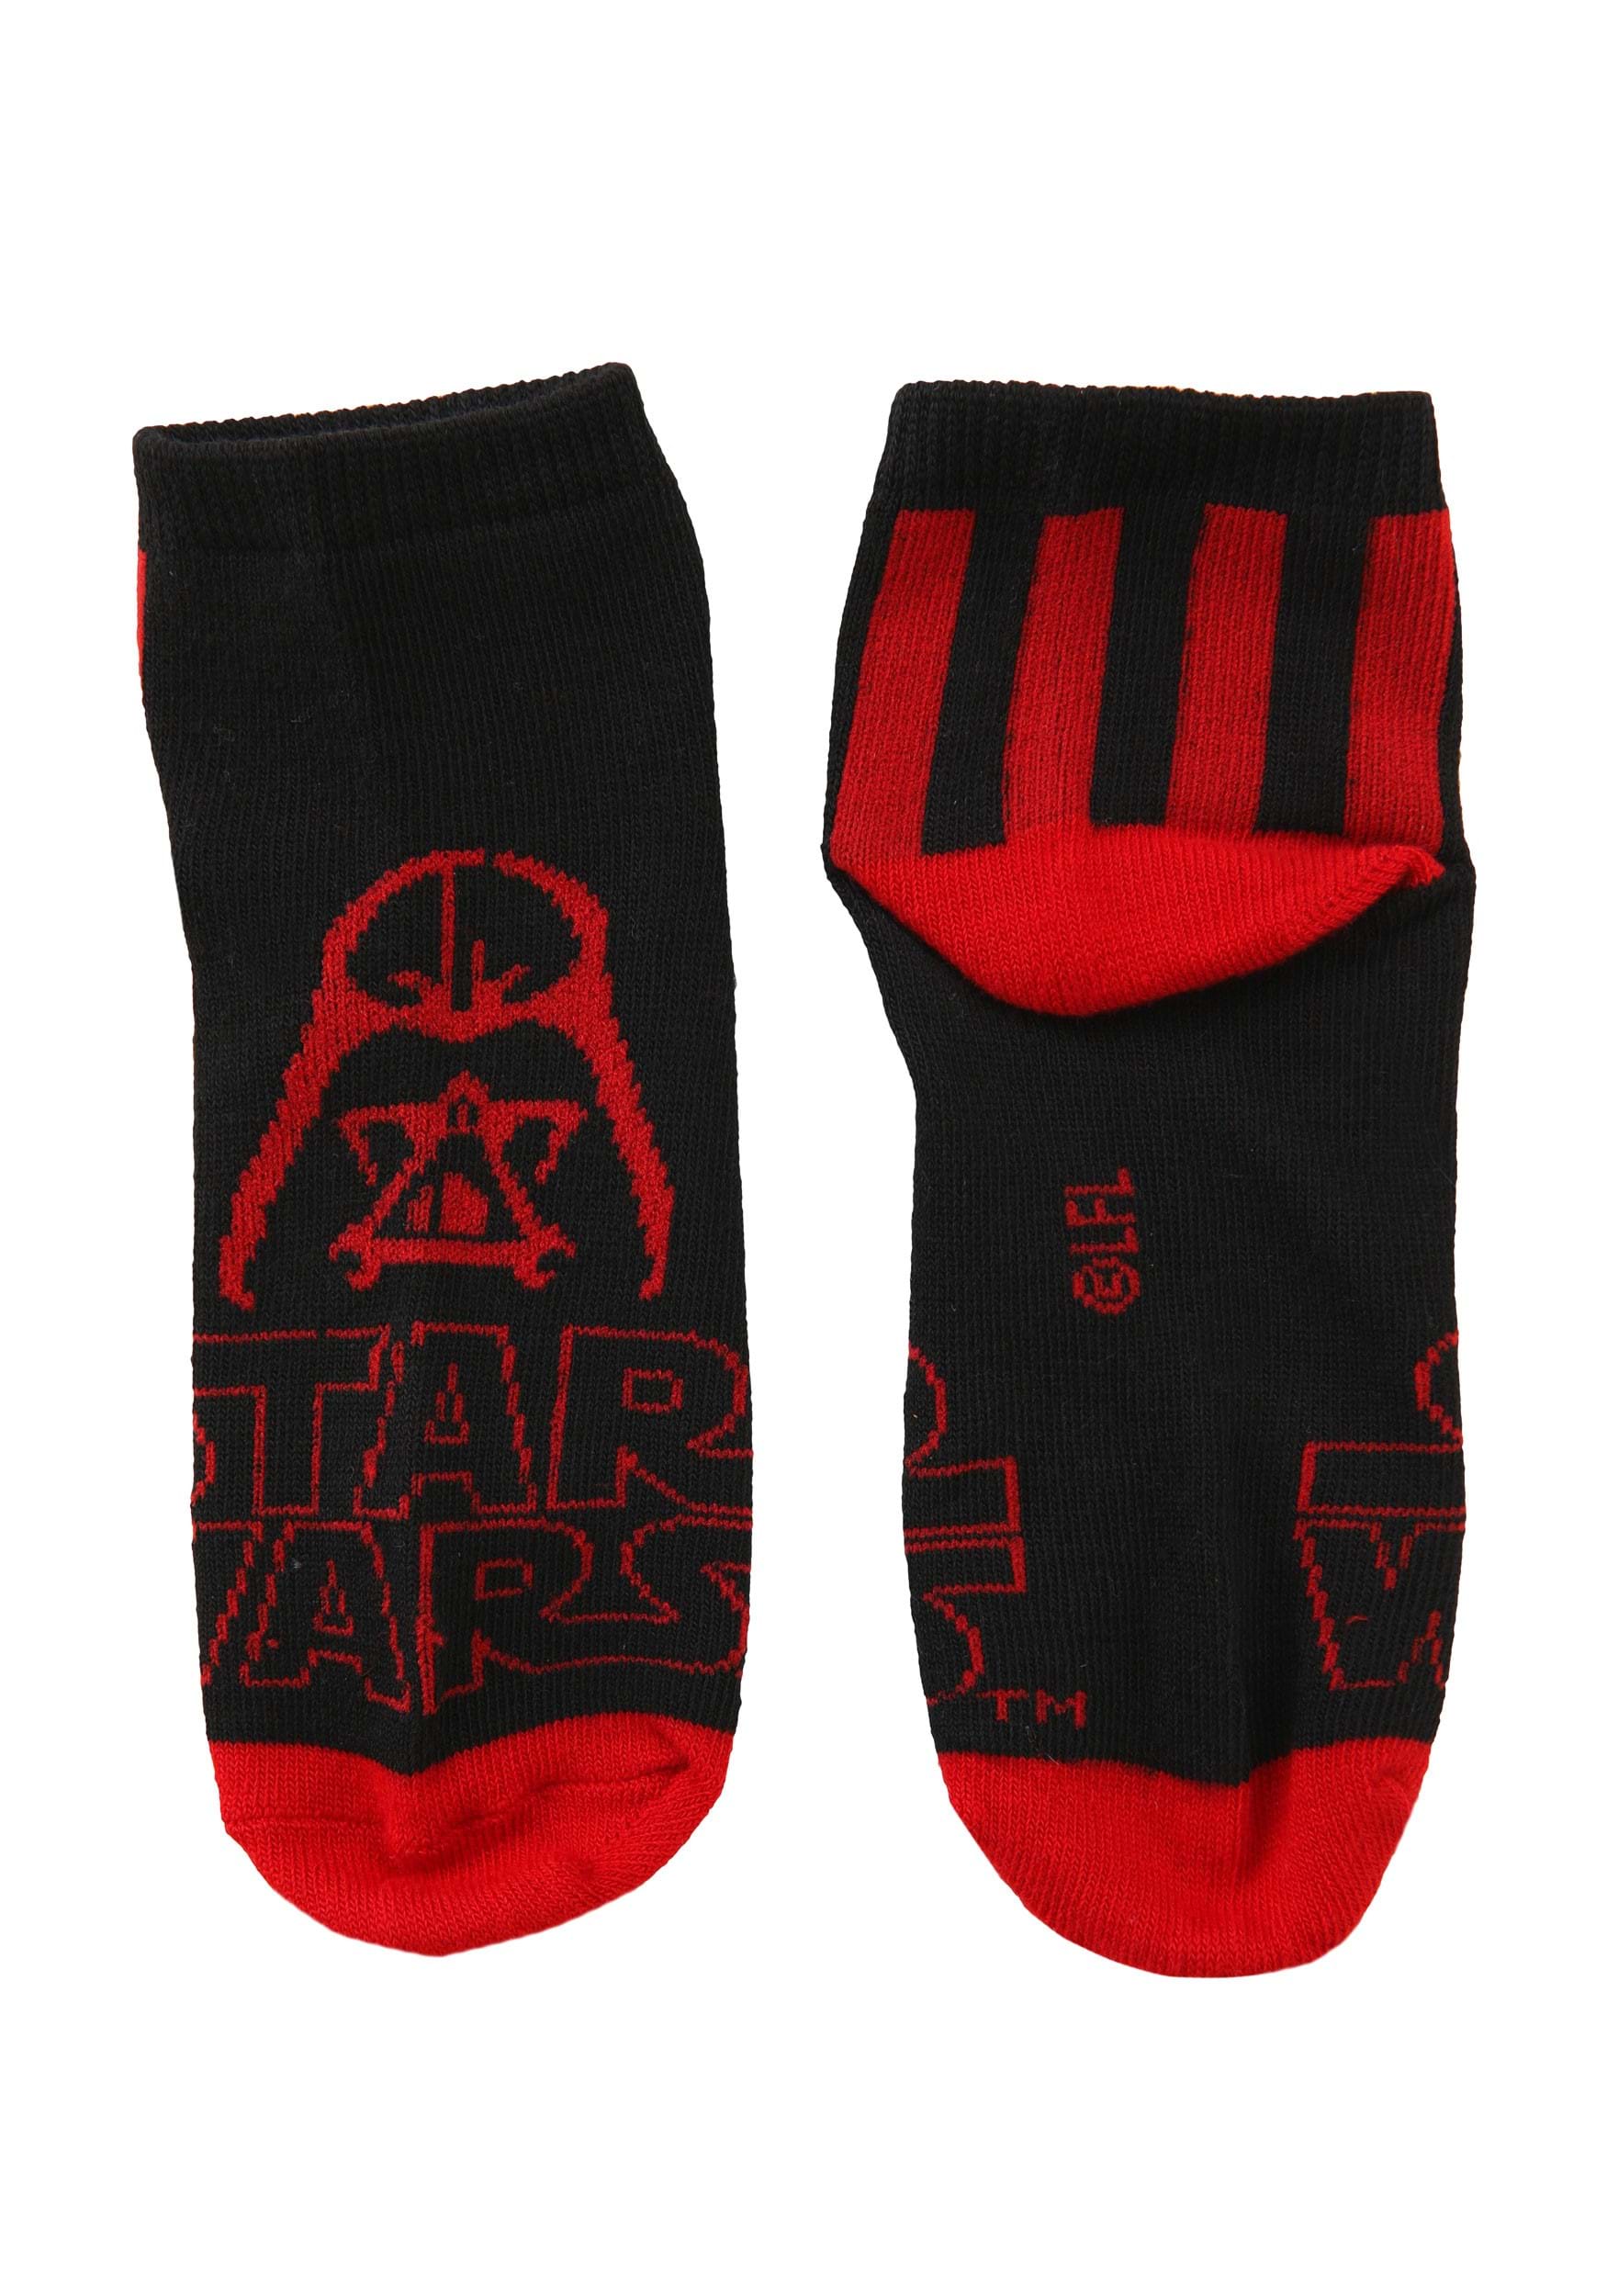 Details about   Disney Star Wars Kids Socks  5 Pair Size 6-8 Shoe Size 10.5-4  NEW 